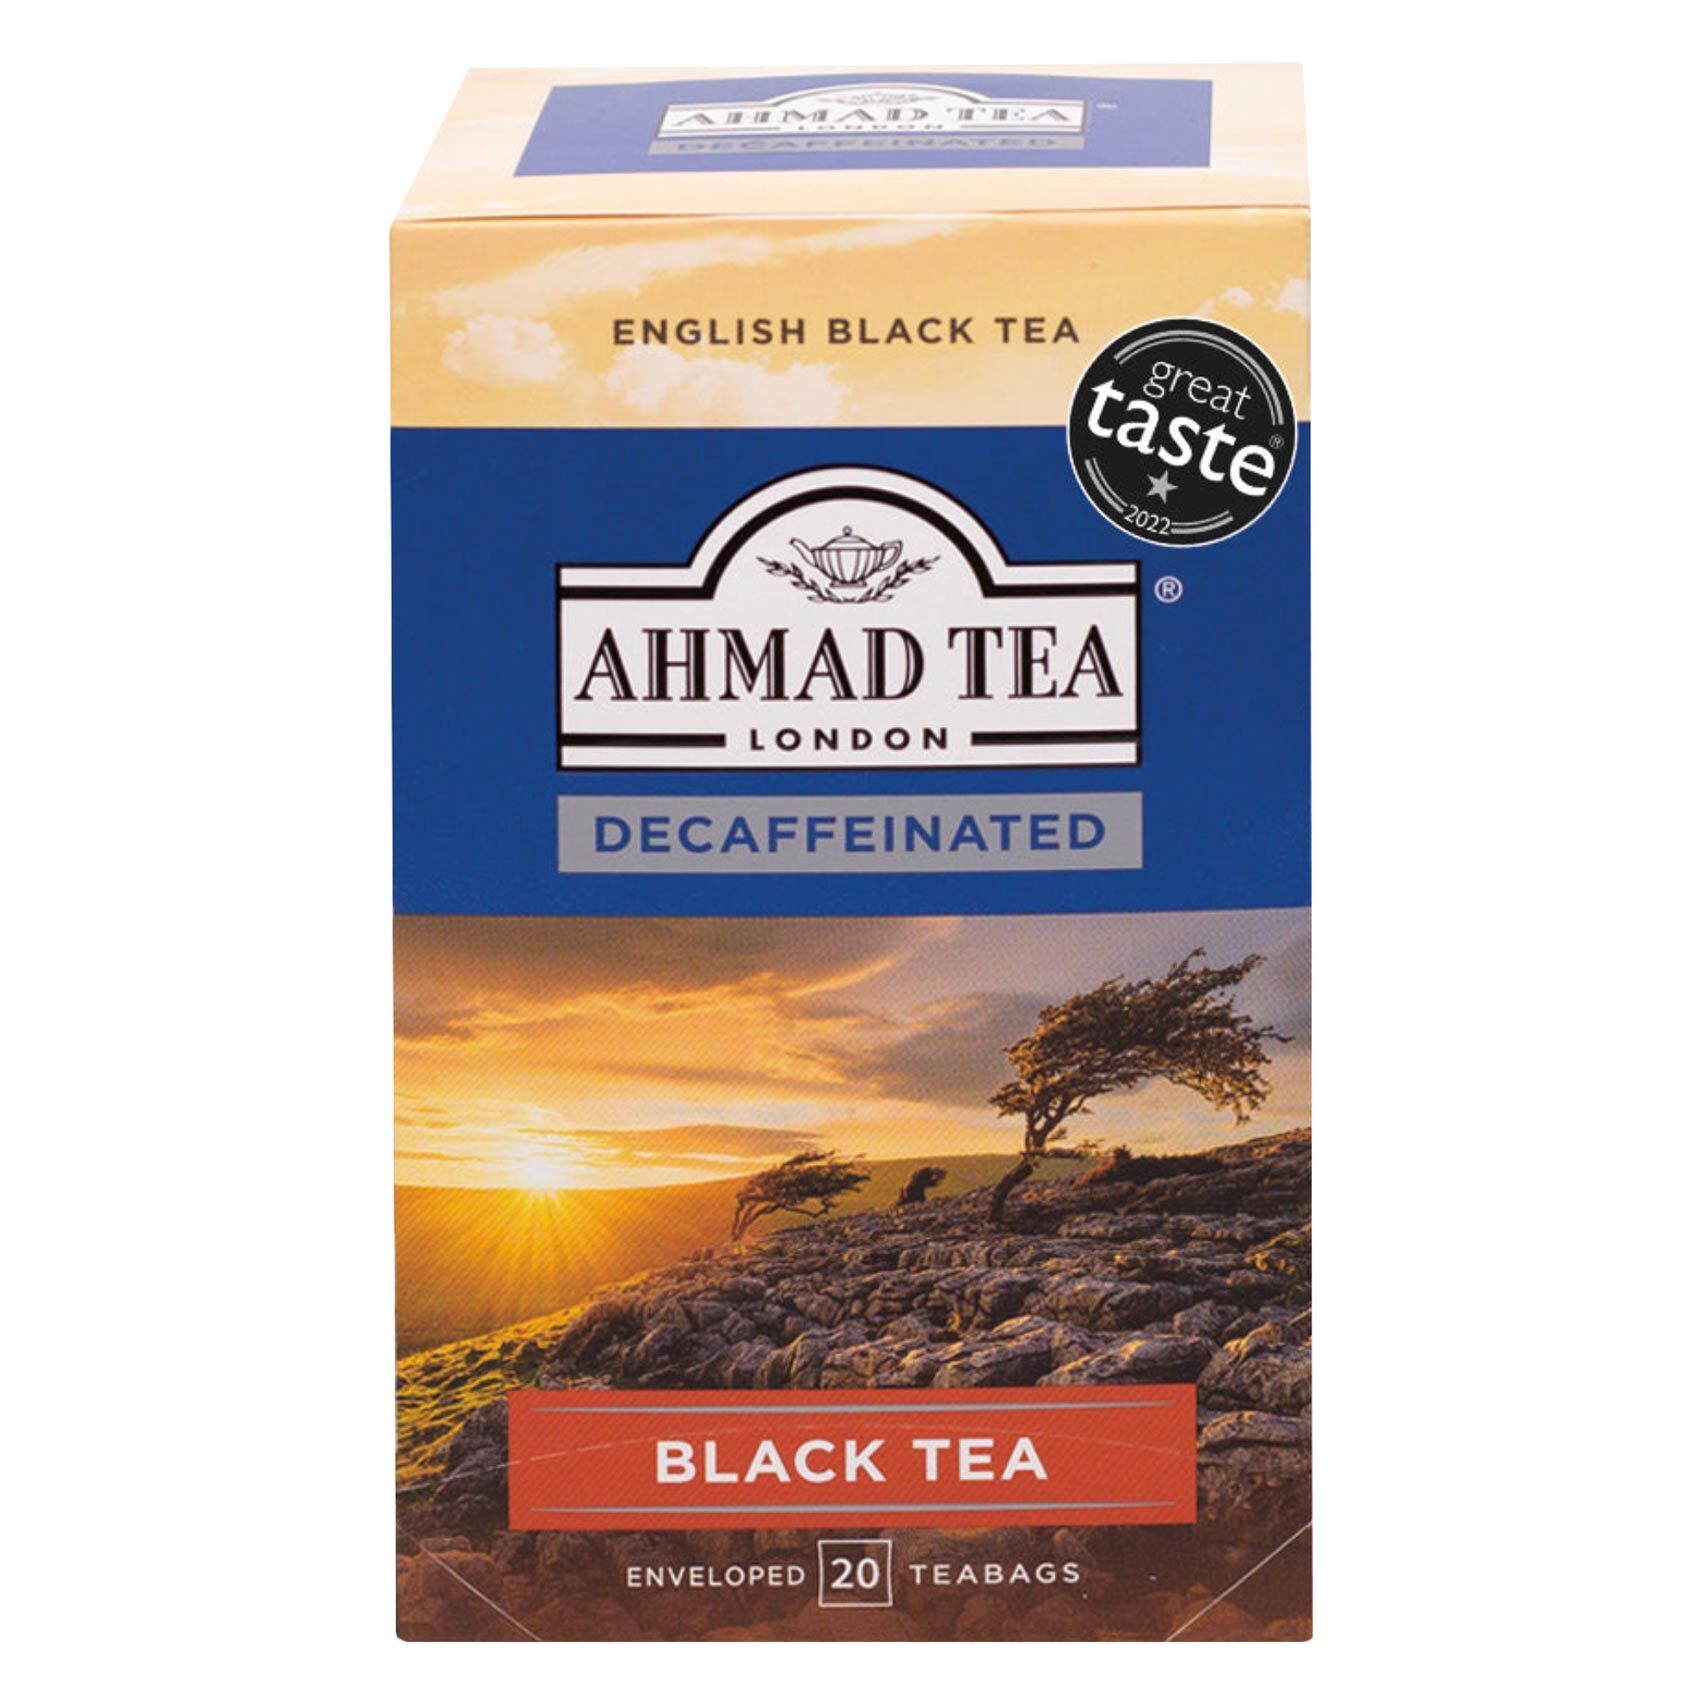 Ahmad Tea English Breakfast 100 Tea Bags Strong & Rich Black 200 g